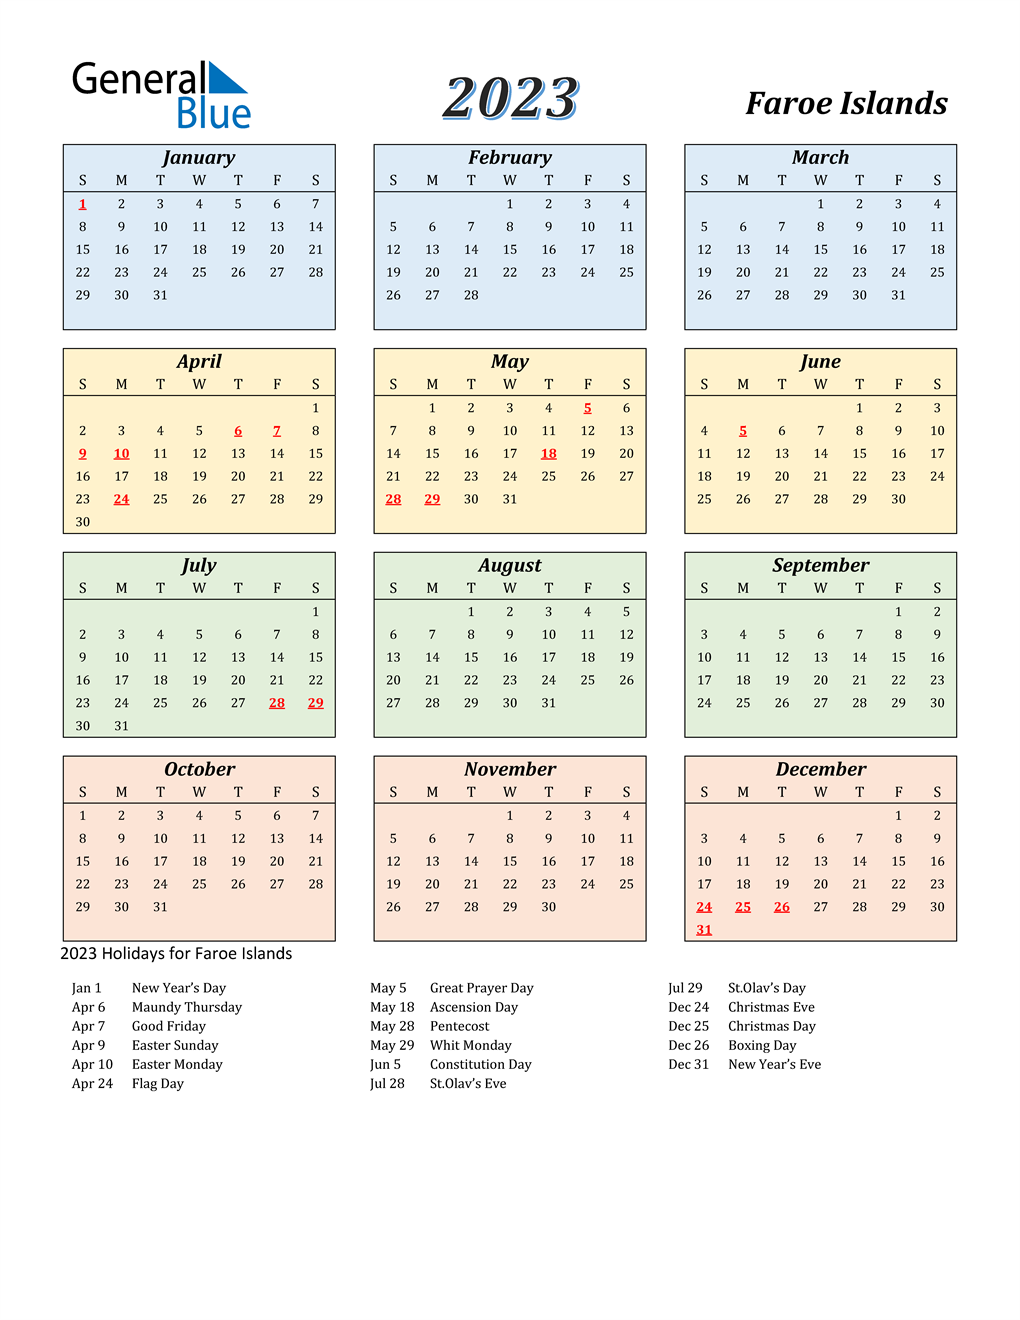 2023 Faroe Islands Calendar with Holidays